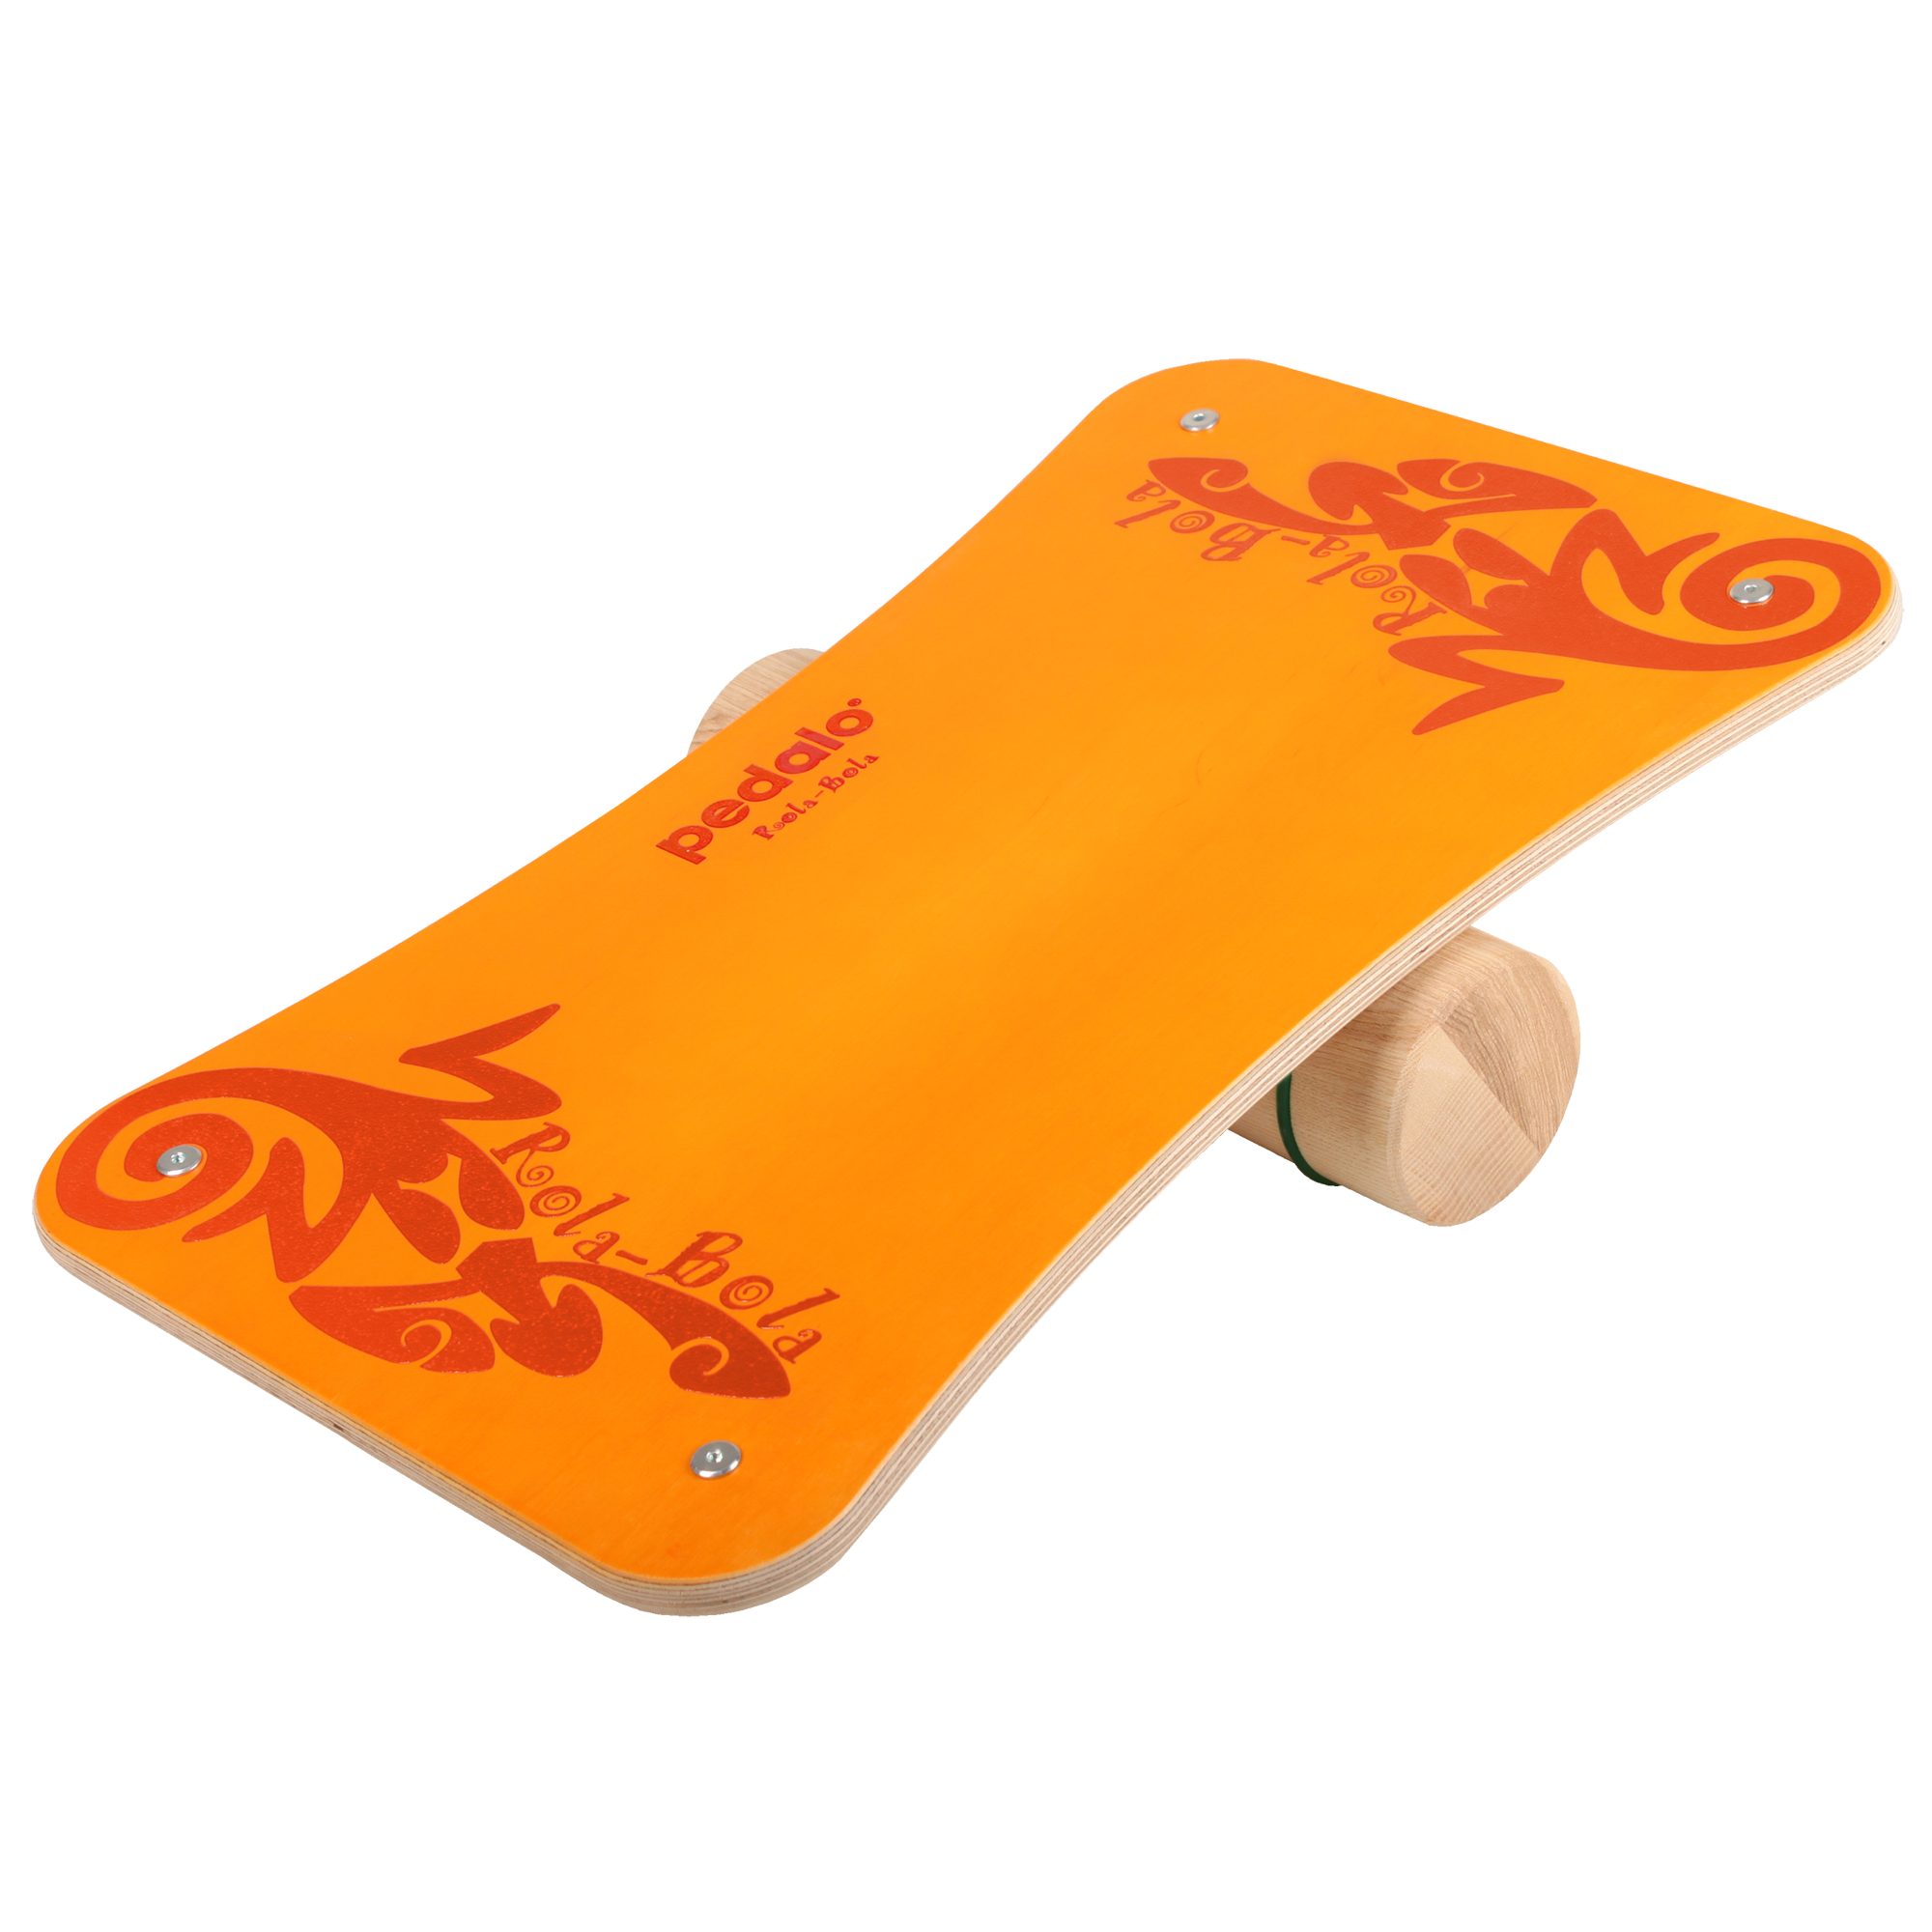 Rola-Bola orange Balanceboard Reflextrainer Balanceboard, Gleichgewichtstrainer, pedalo® Pedalo